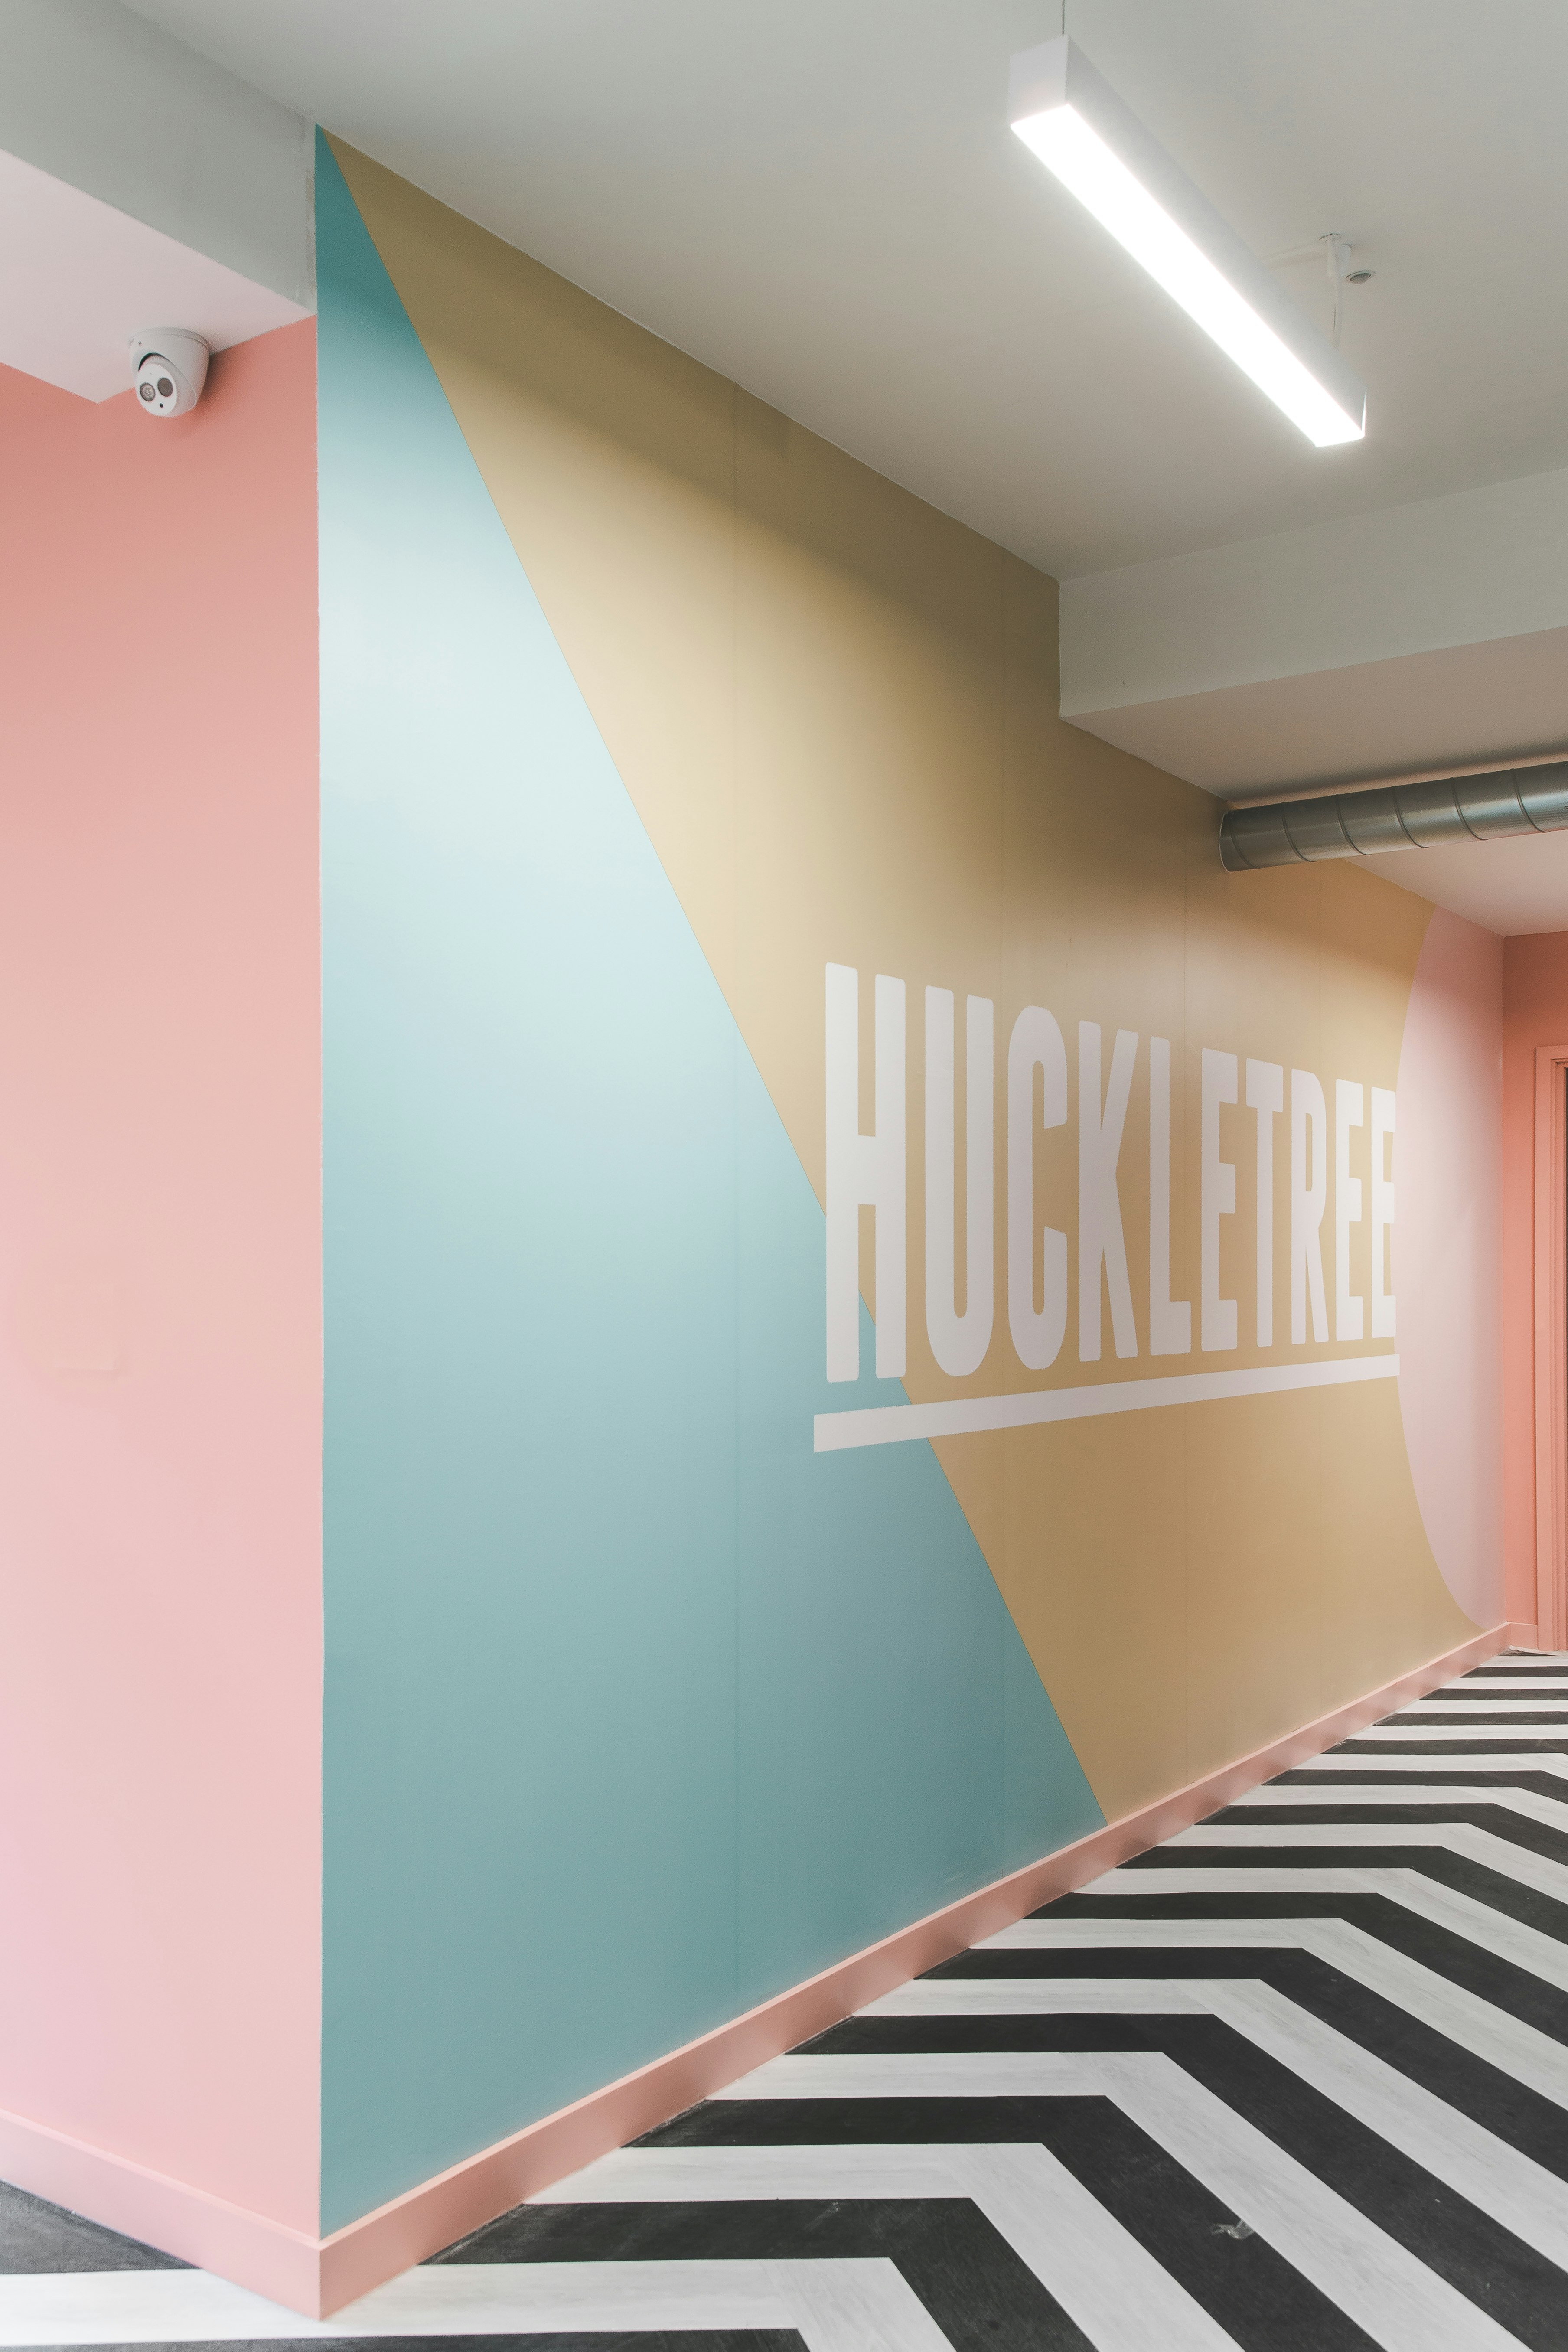 Huckletree Ancoats - Live Lounge image 4